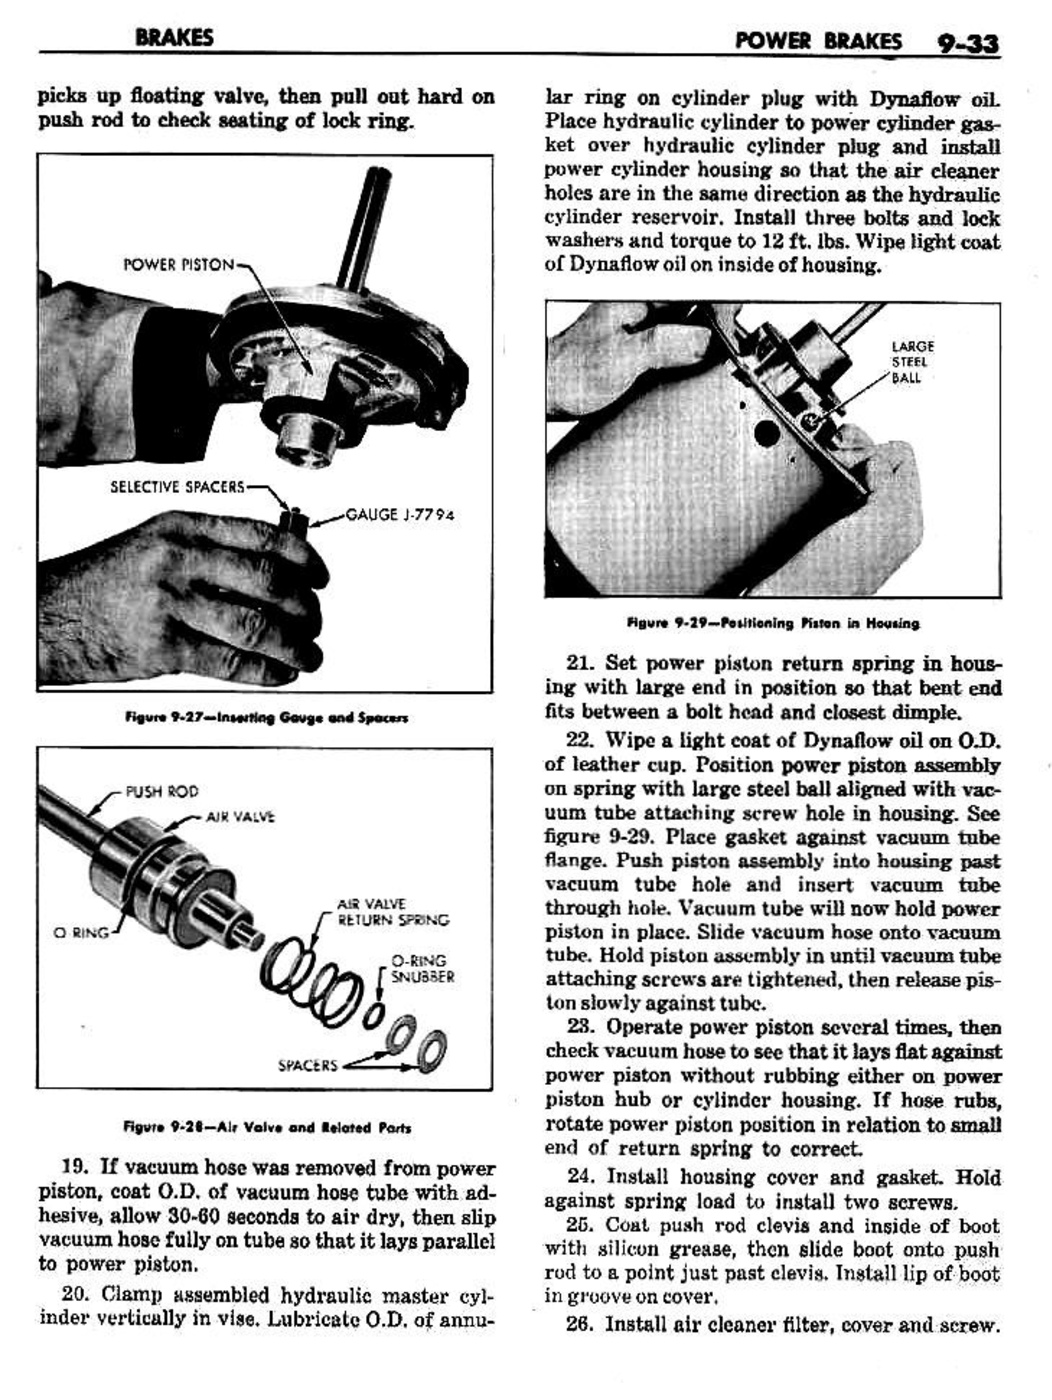 n_10 1959 Buick Shop Manual - Brakes-033-033.jpg